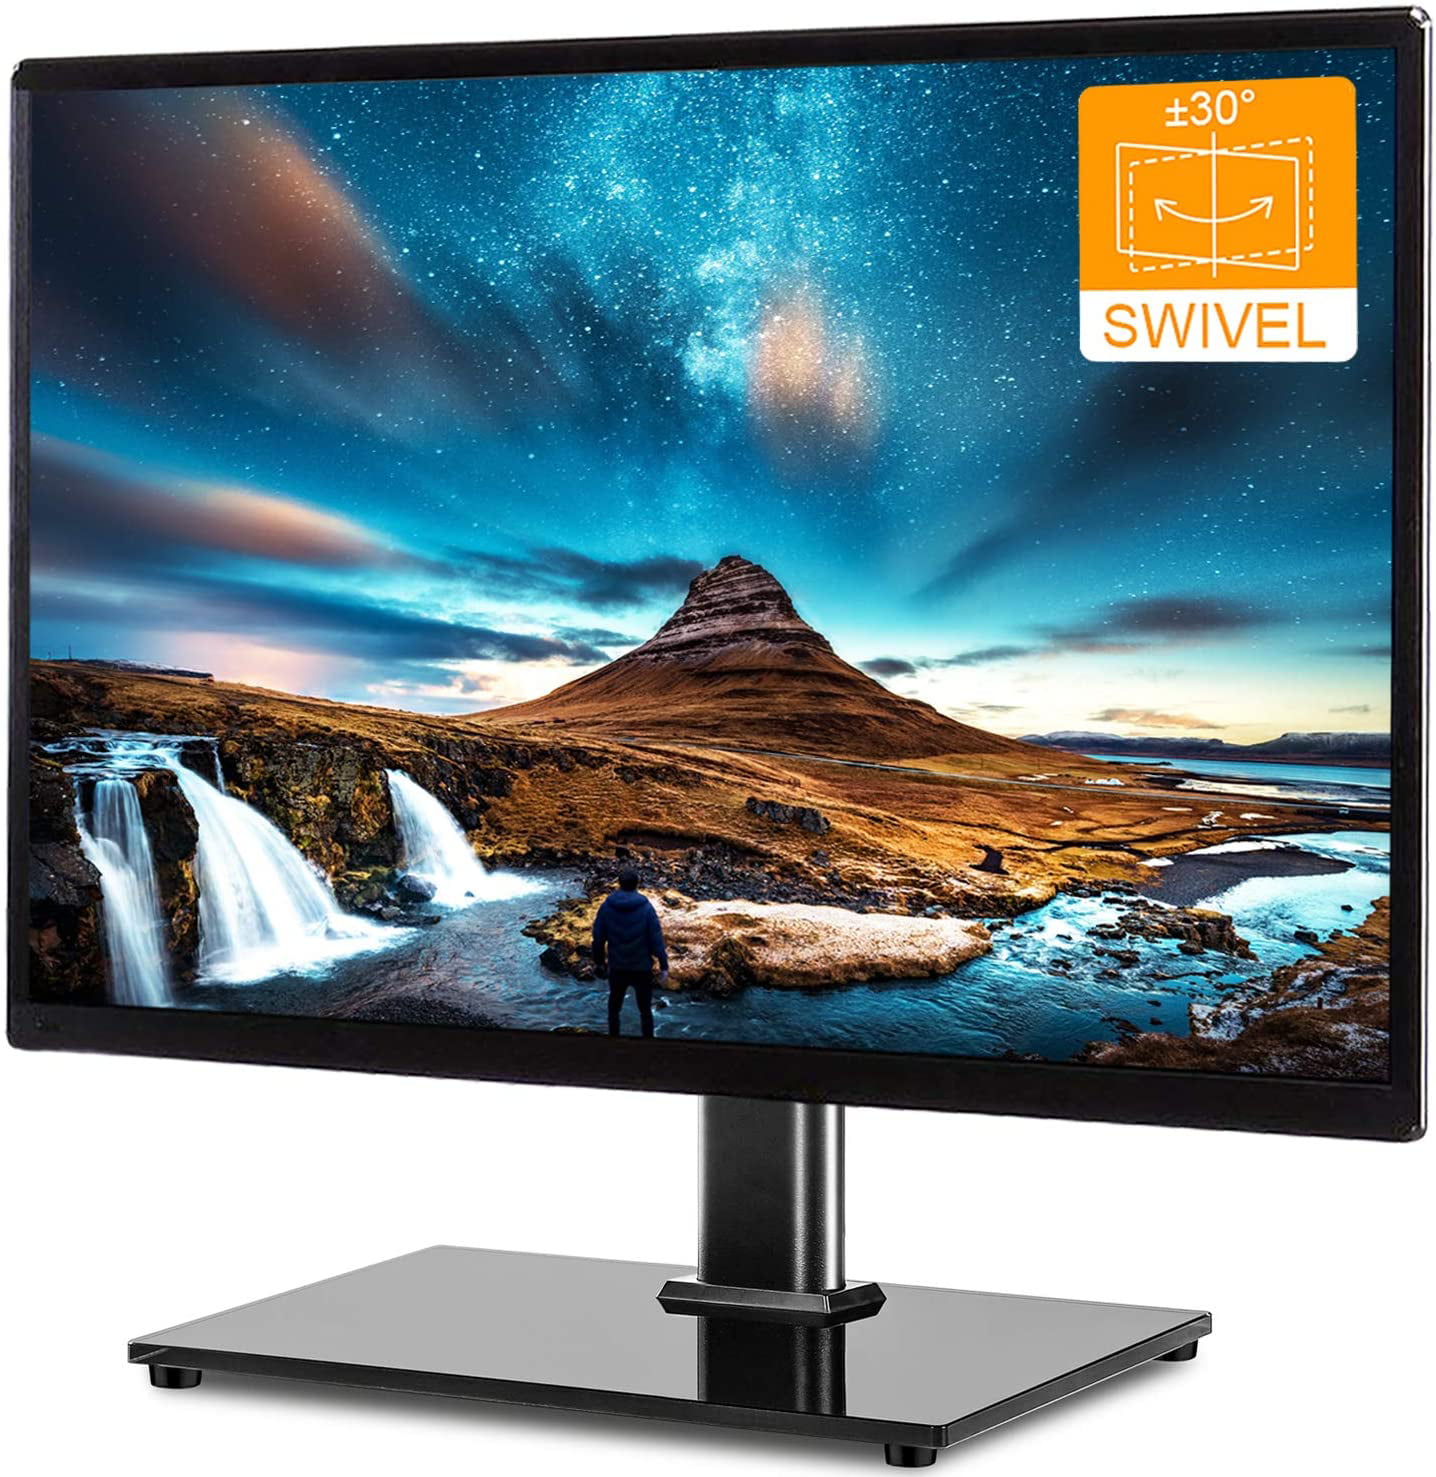 Swivel Universal TV Floor Stand for 27 32 37 42 47 50 55 inch LCD LED TVs 